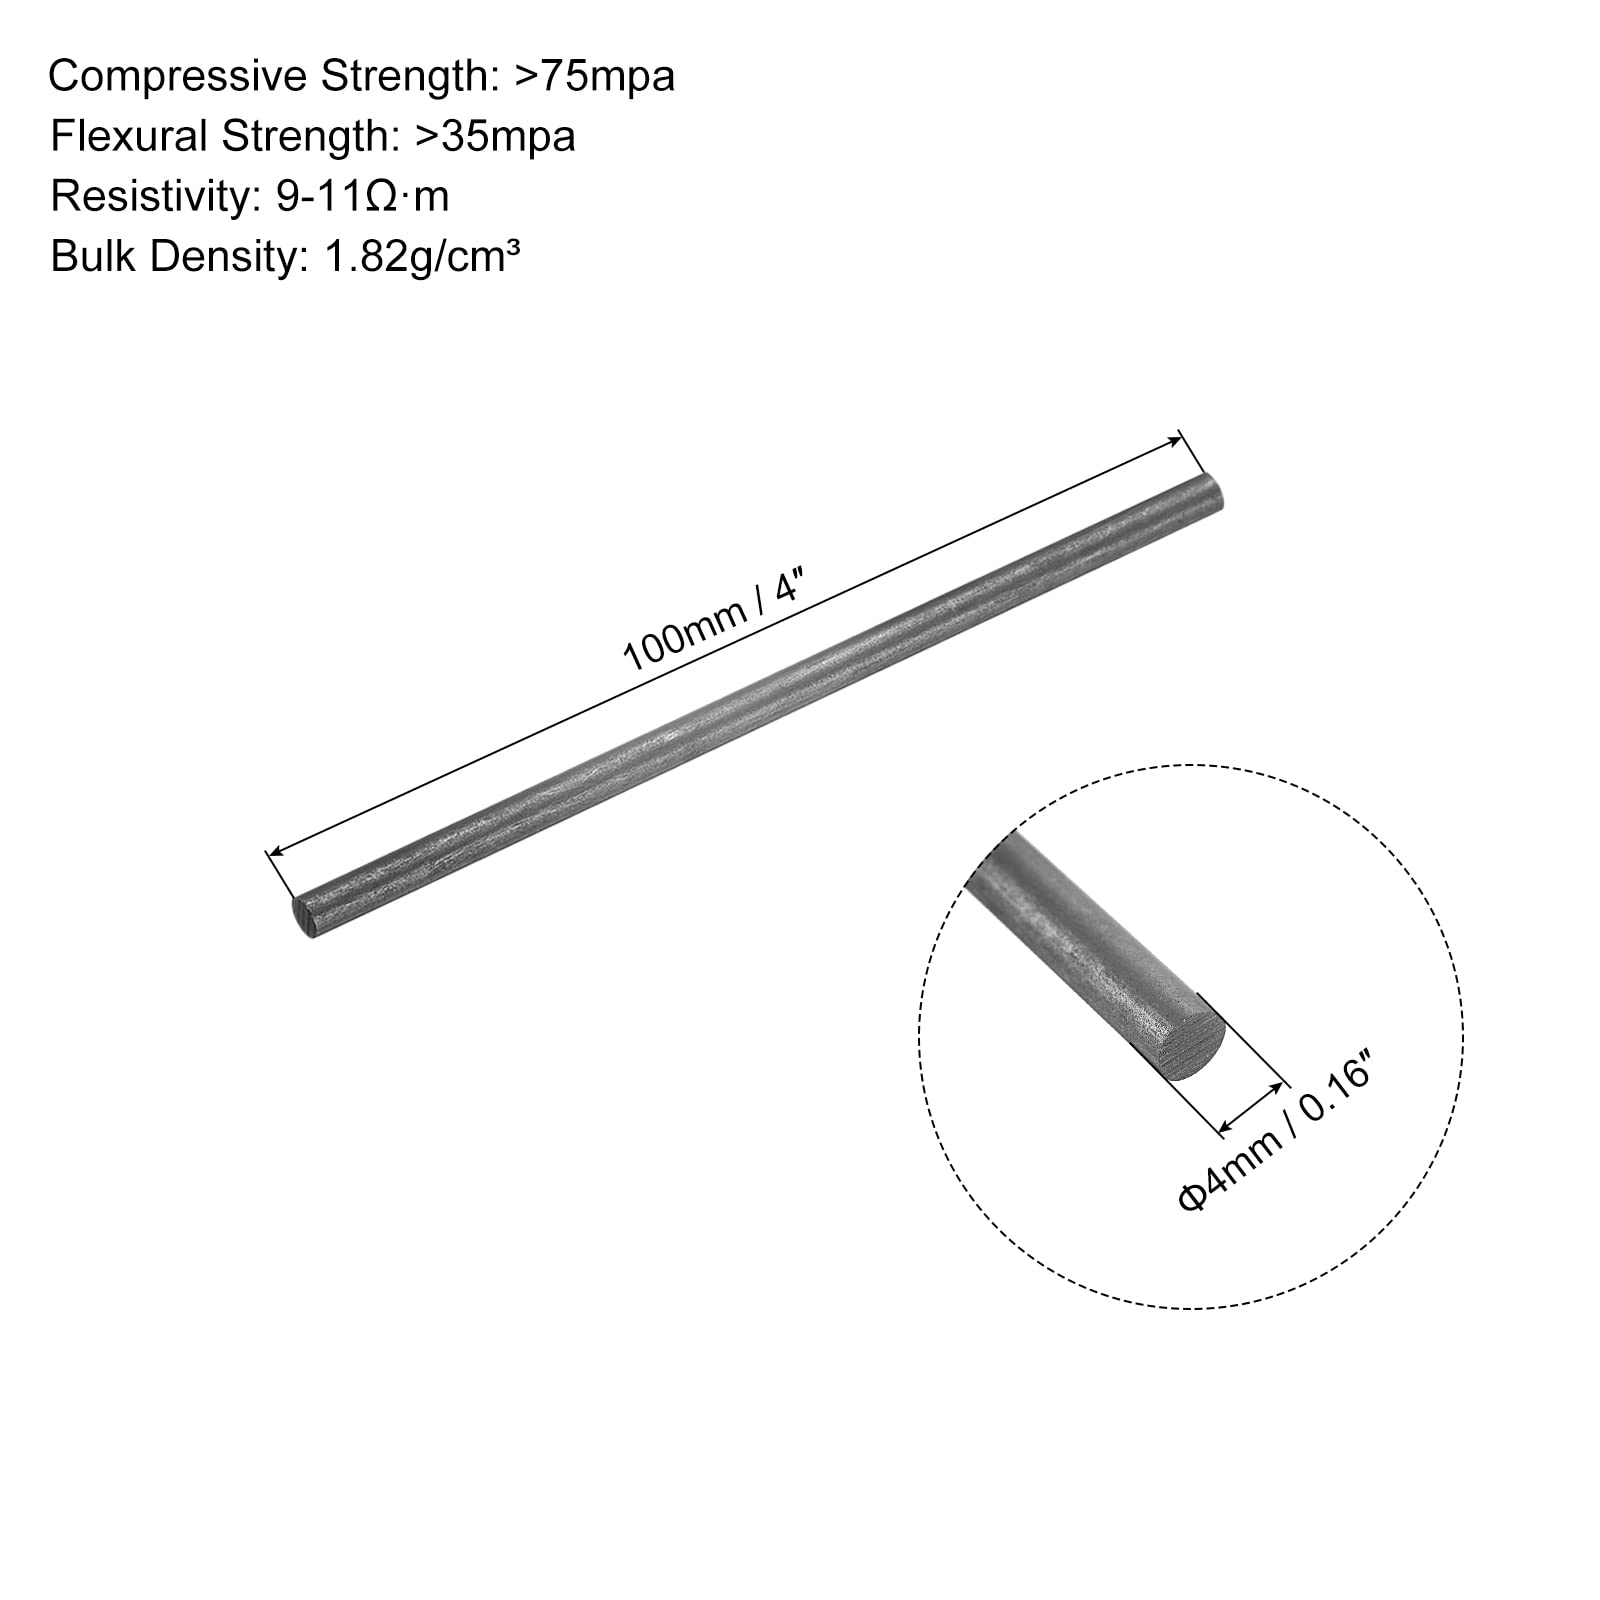 PATIKIL Graphite Rod Graphite Stirring Rod Cylinder Stick Carbon Rod 100x4mm Black for Electrode, Melting Casting, Crucibles, Pack of 10